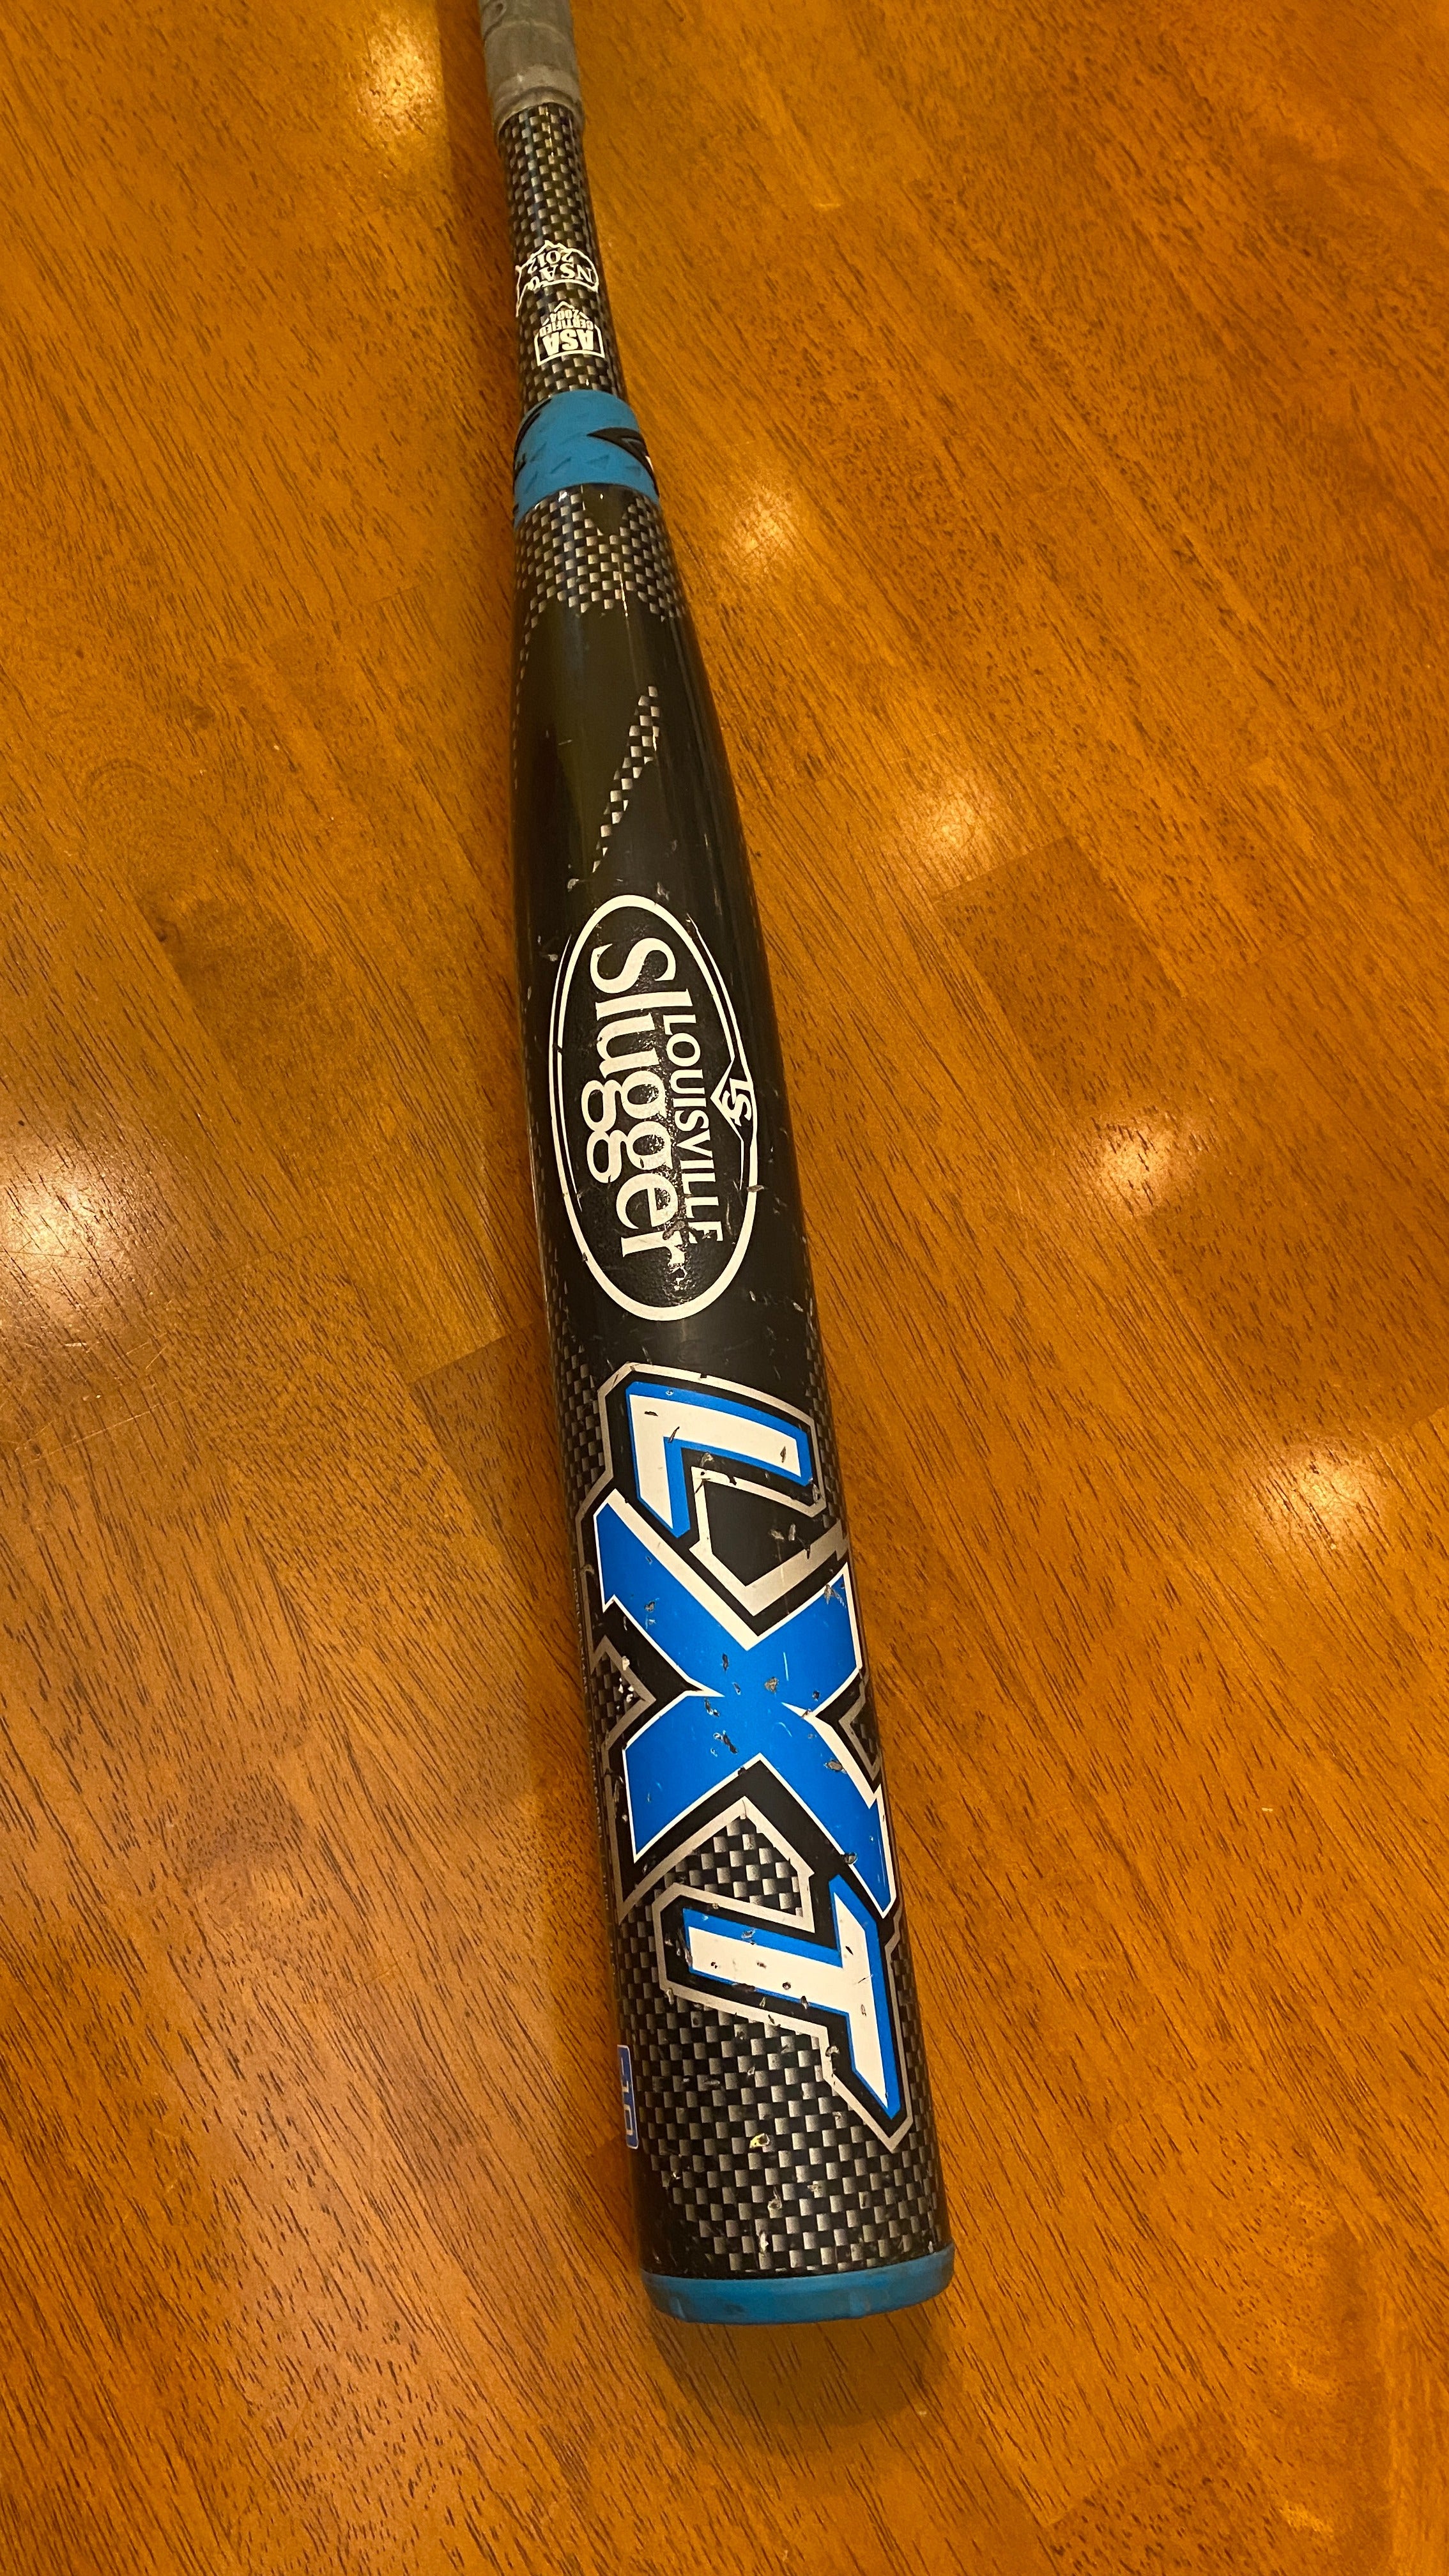 New Louisville Slugger LXT FPLX14 Fastpitch Softball Bat Blue/Black